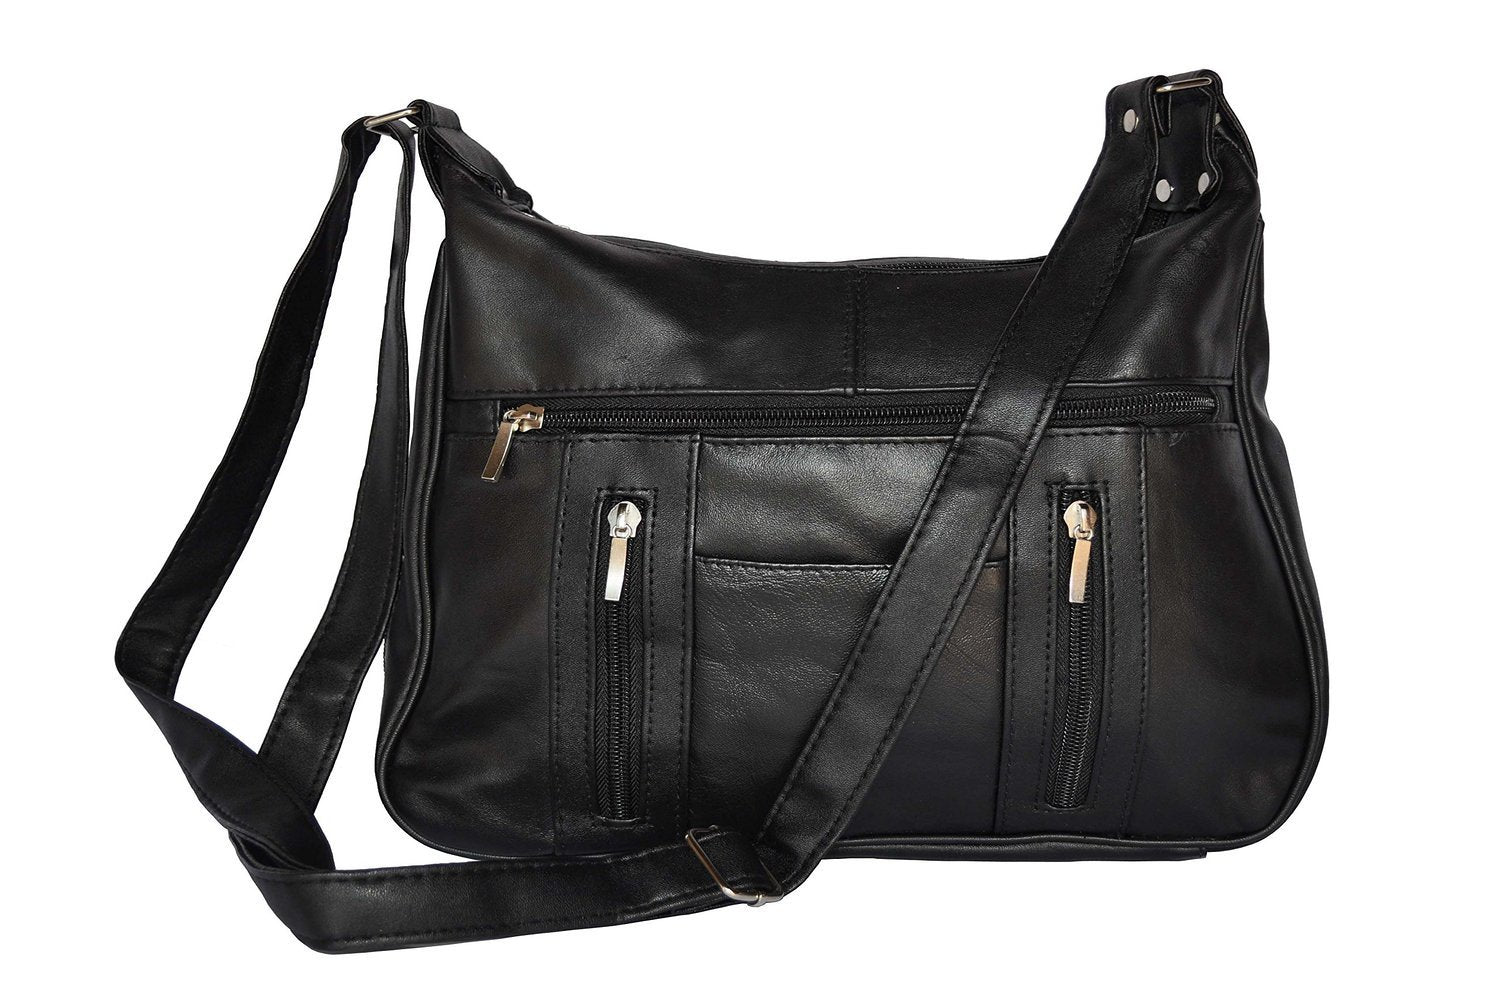 Twenty Four Checkered Tote Bags Shoulder Bag Women Fashion Purses Leather Satchel Handbags with Adjustale Cross Body Strap (Cream), Women's, Size